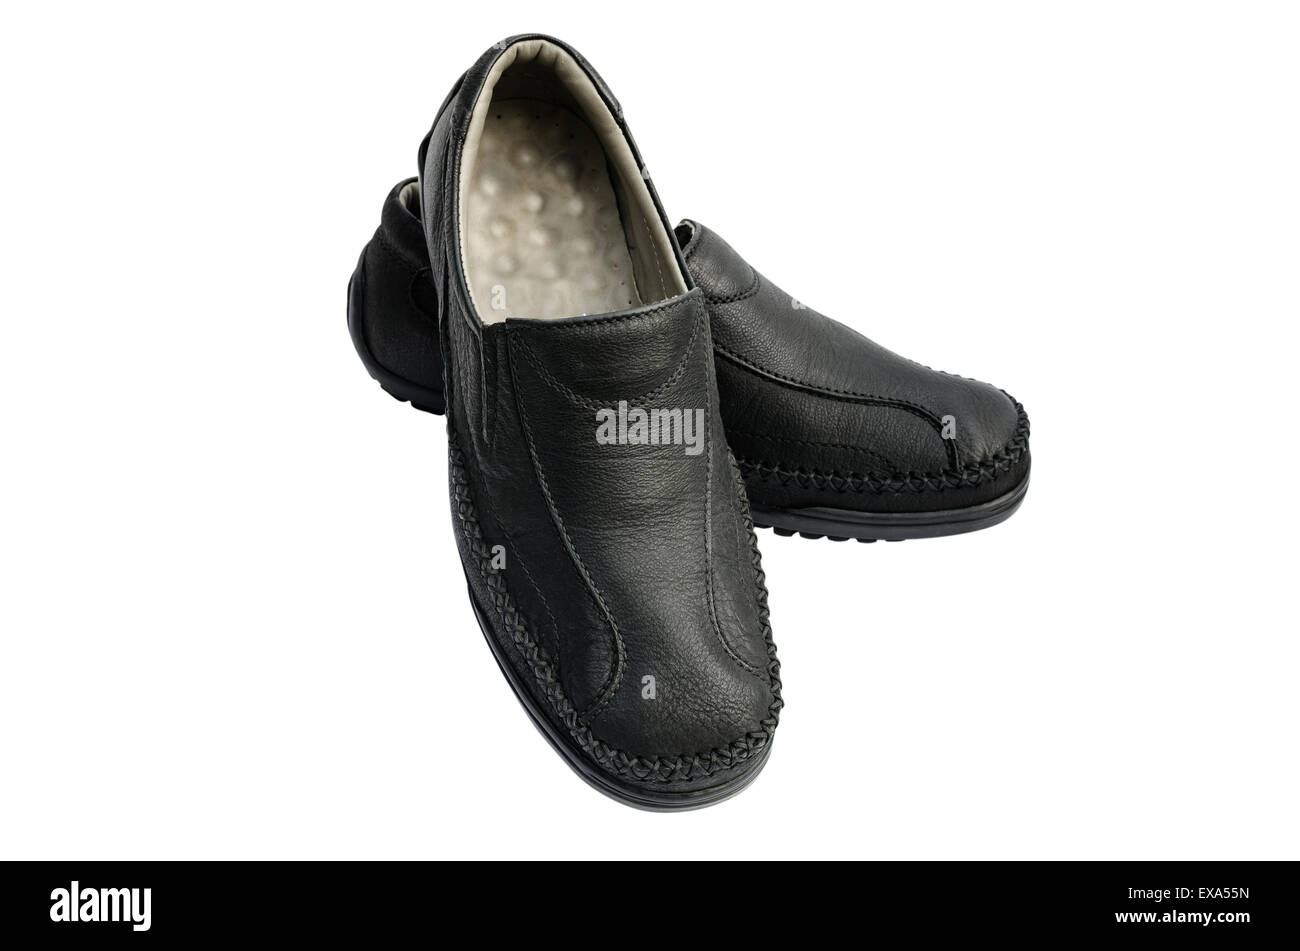 black leather shoes isolated on white background Stock Photo